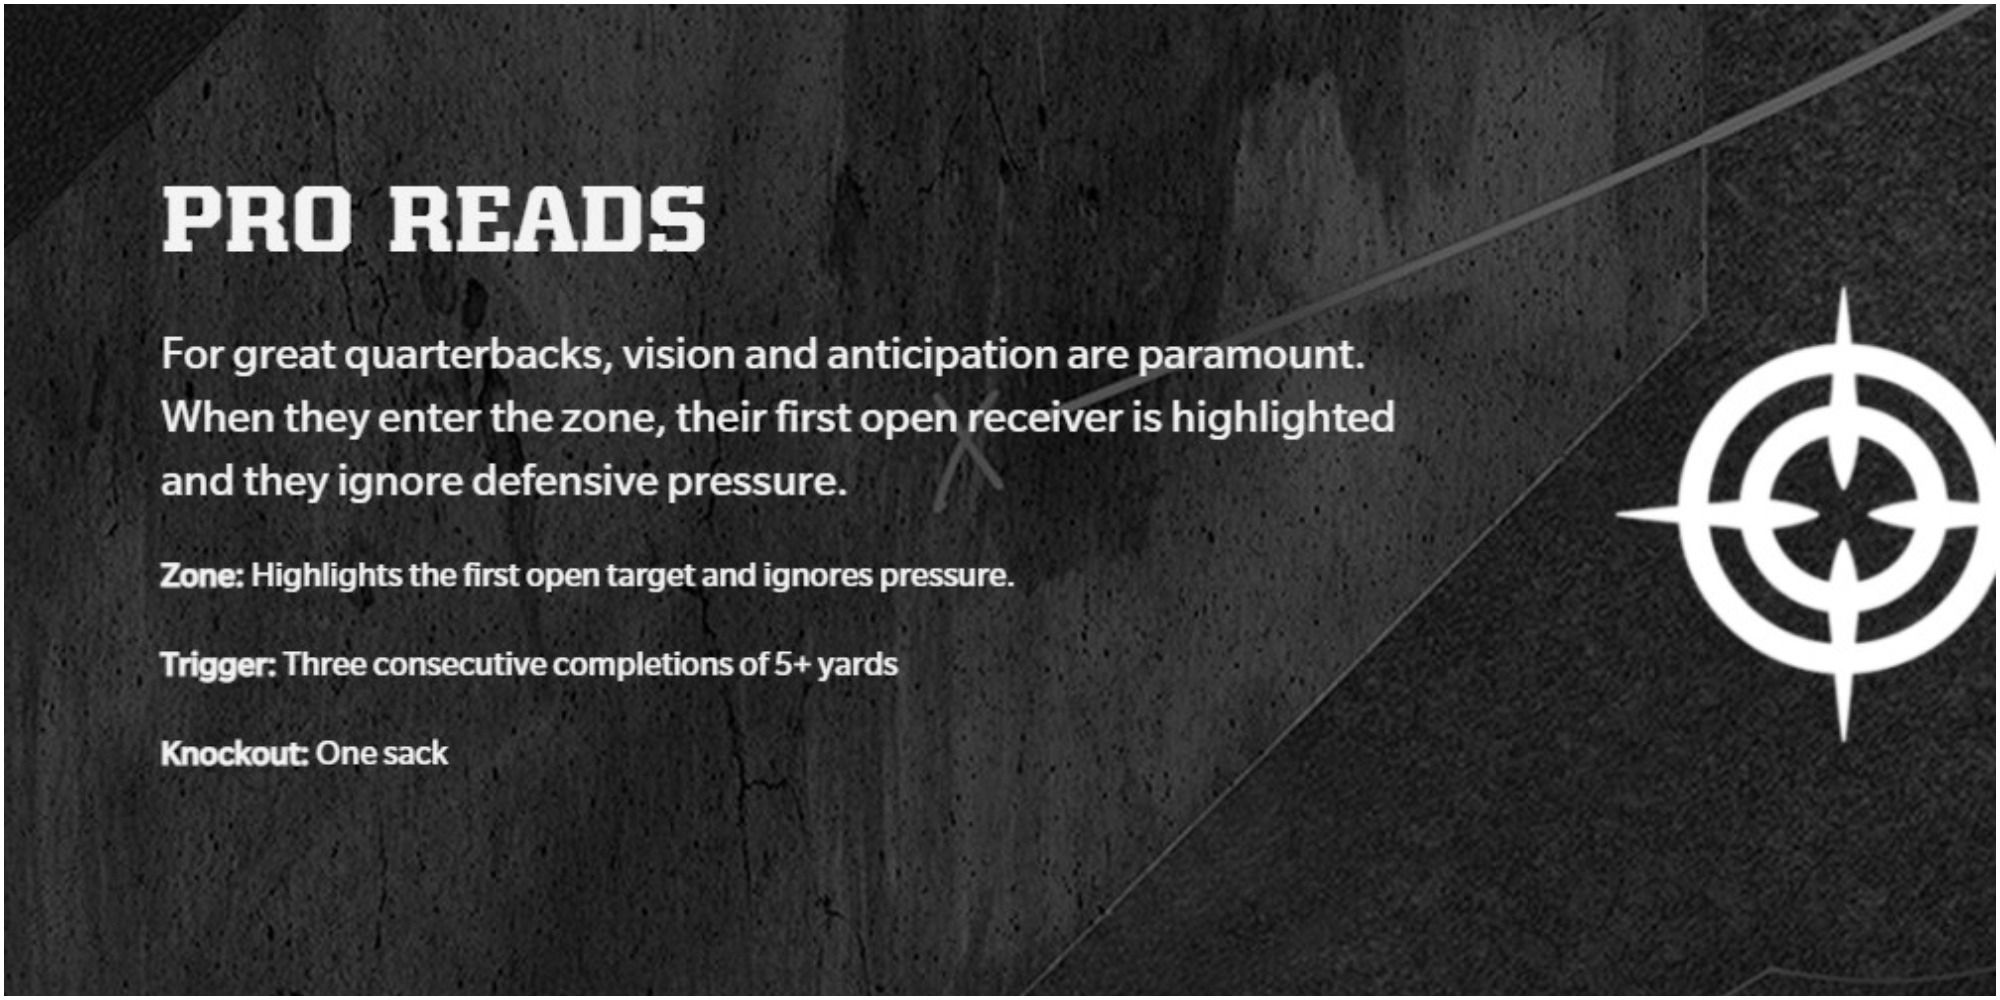 Madden NFL 22 Pro Reads Description On The Website